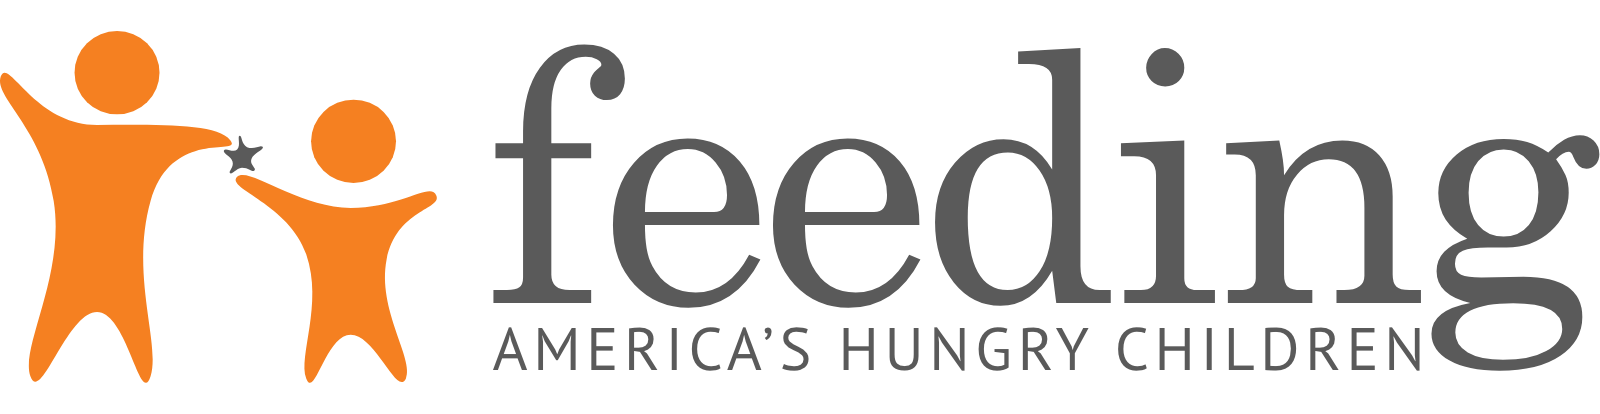 Feeding America's Hungry Children logo